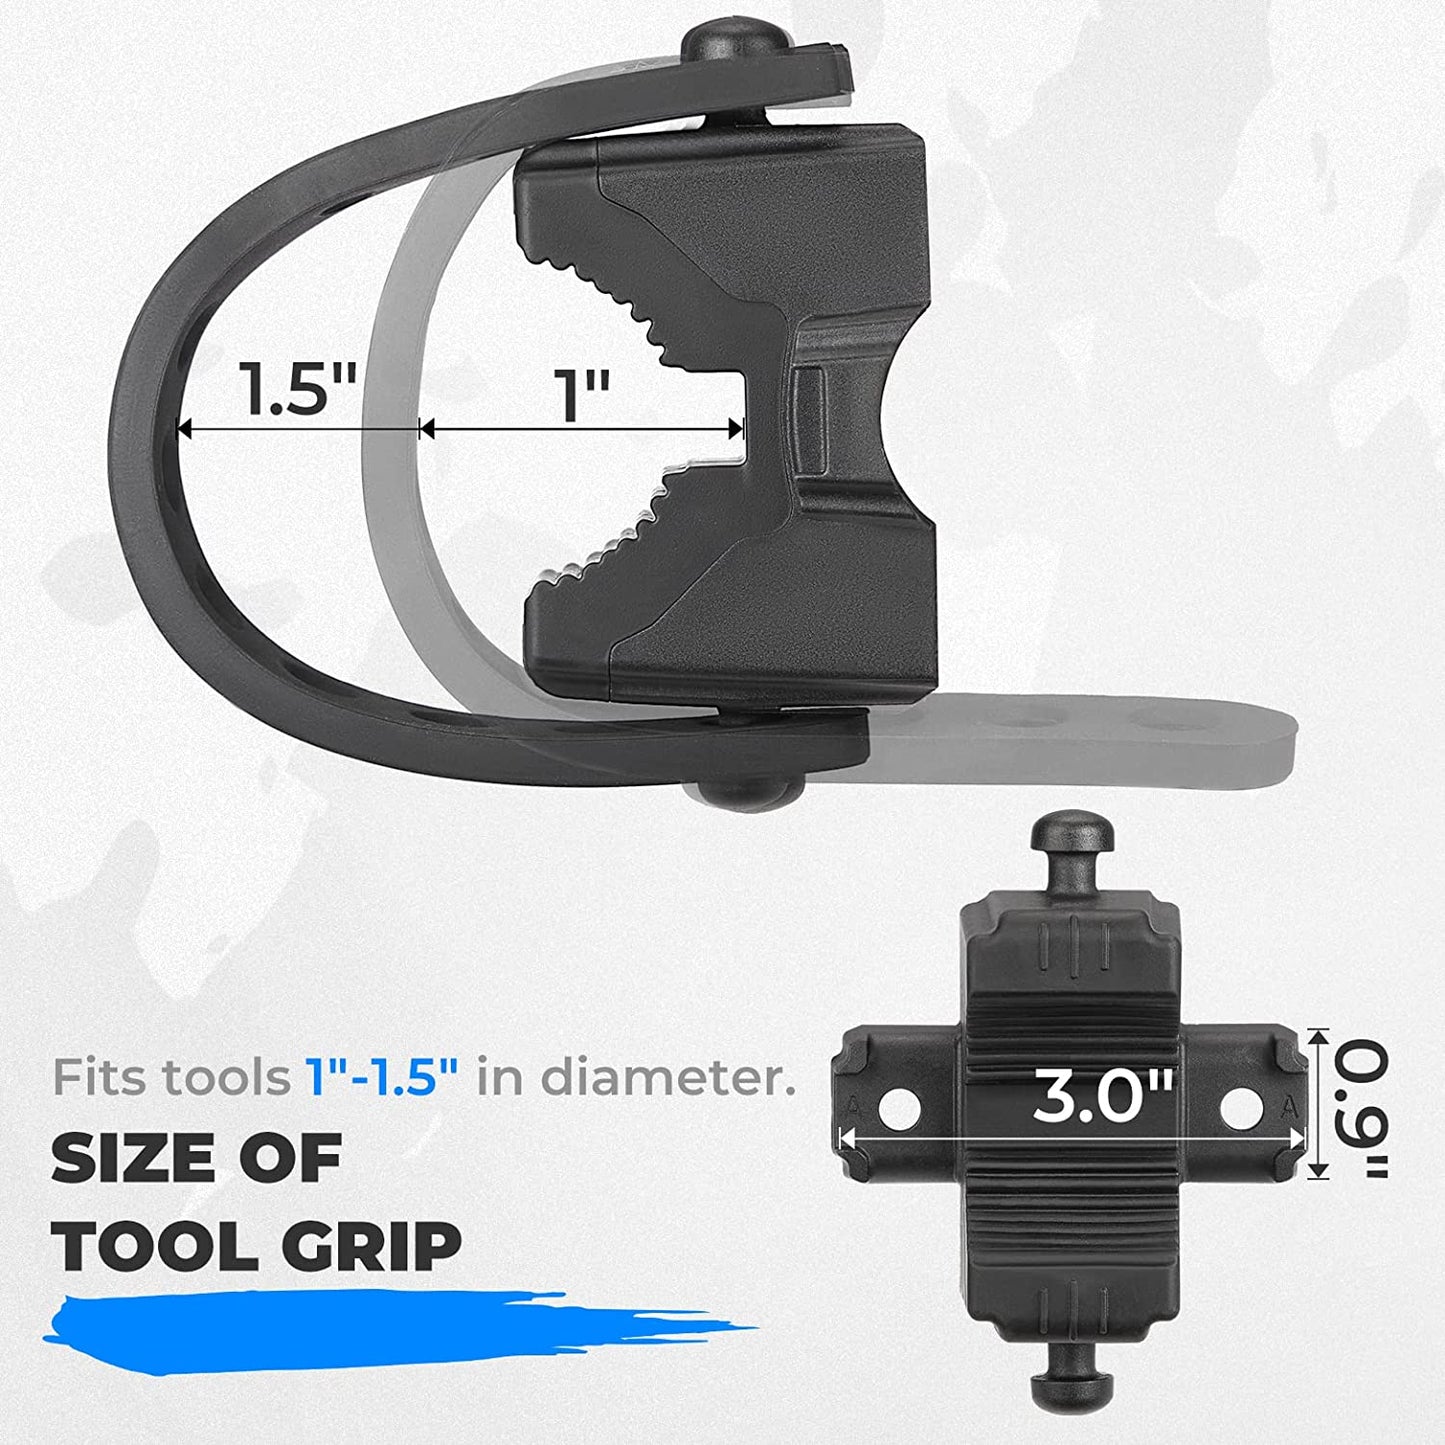 Shovel Holder Rubber Clamp Grip Mount Fits 1"-1.5" Diameter Tools